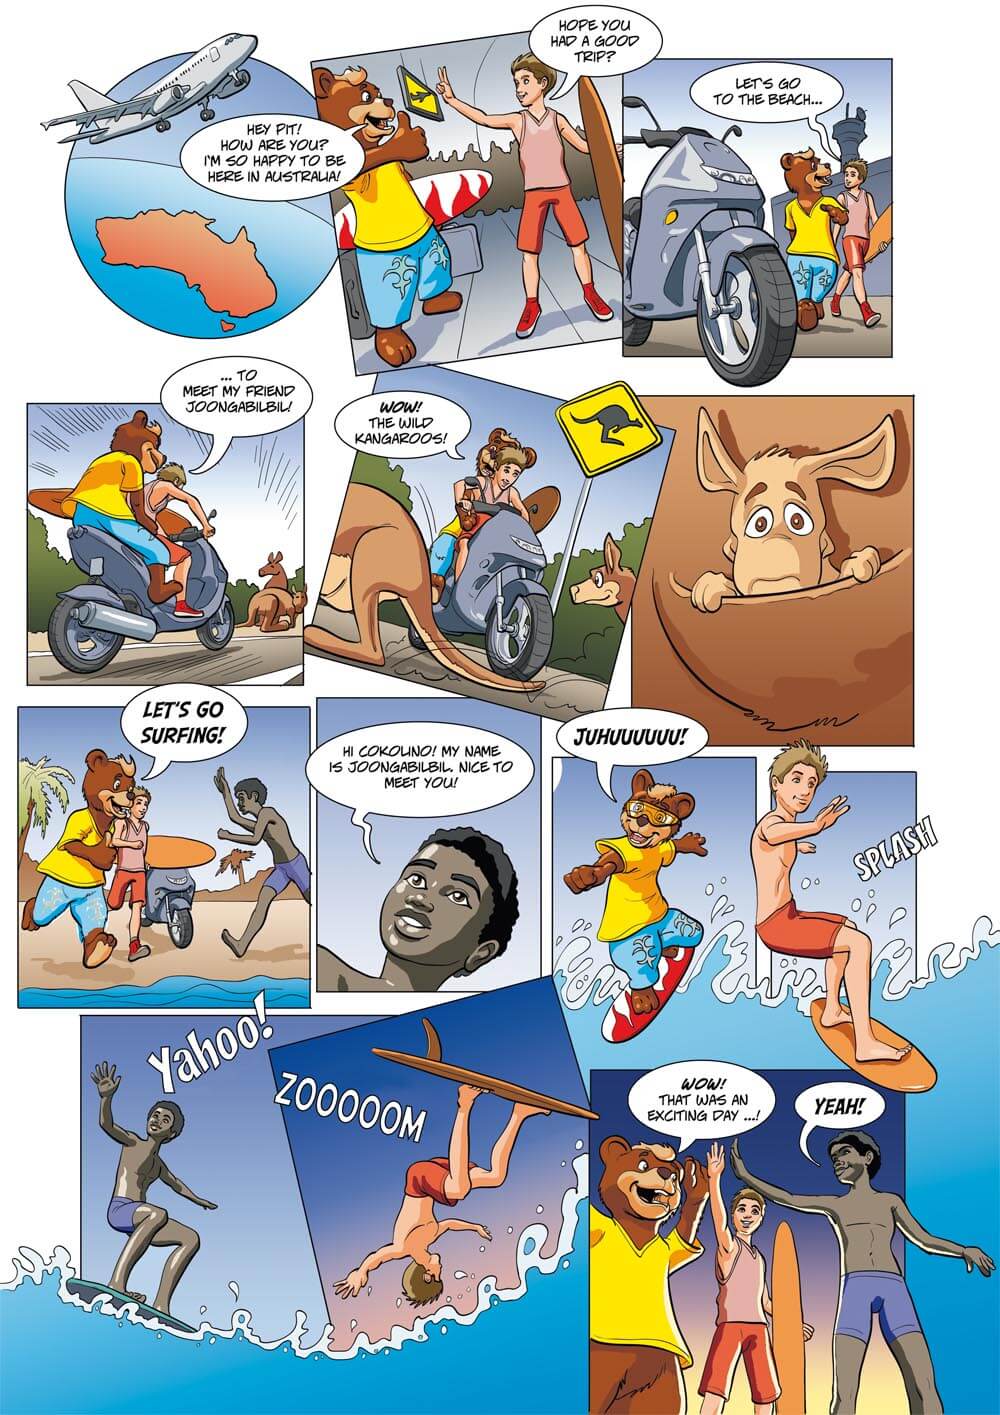 Comic-Strip über Cokolino mit Surfern